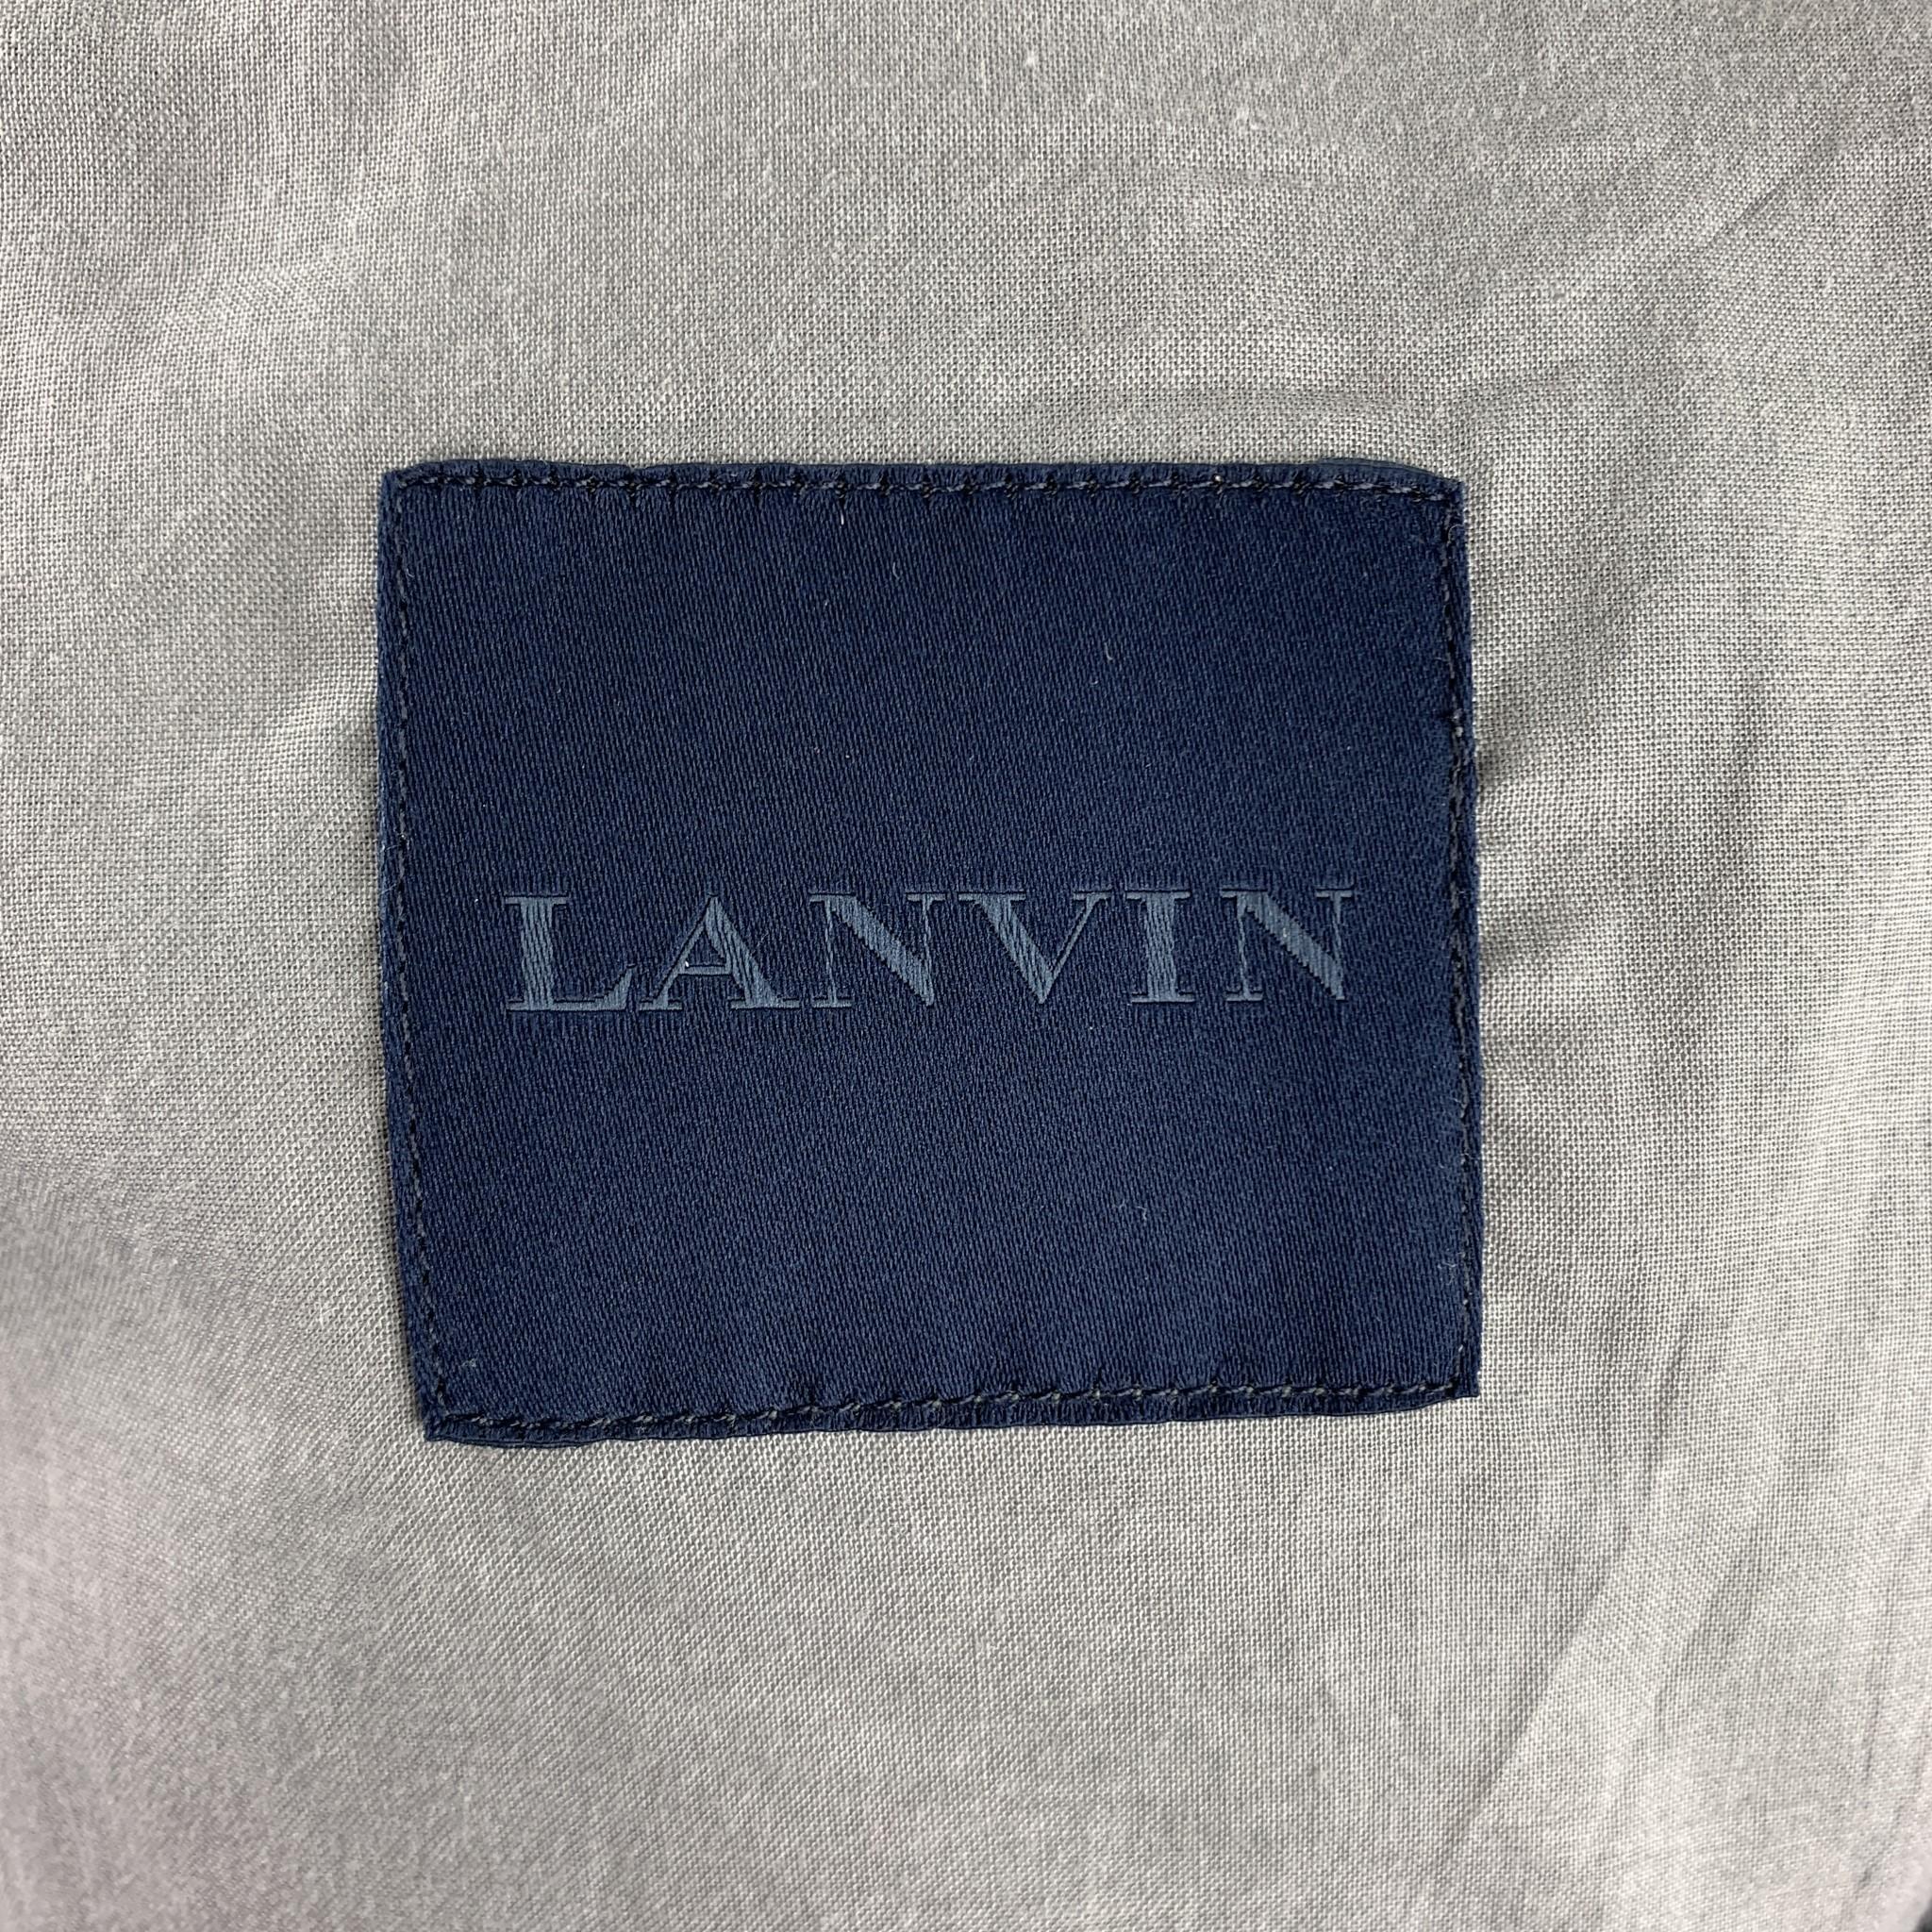 LANVIN Grey Suede Jacket - Men's Size US 38 / IT 48  2